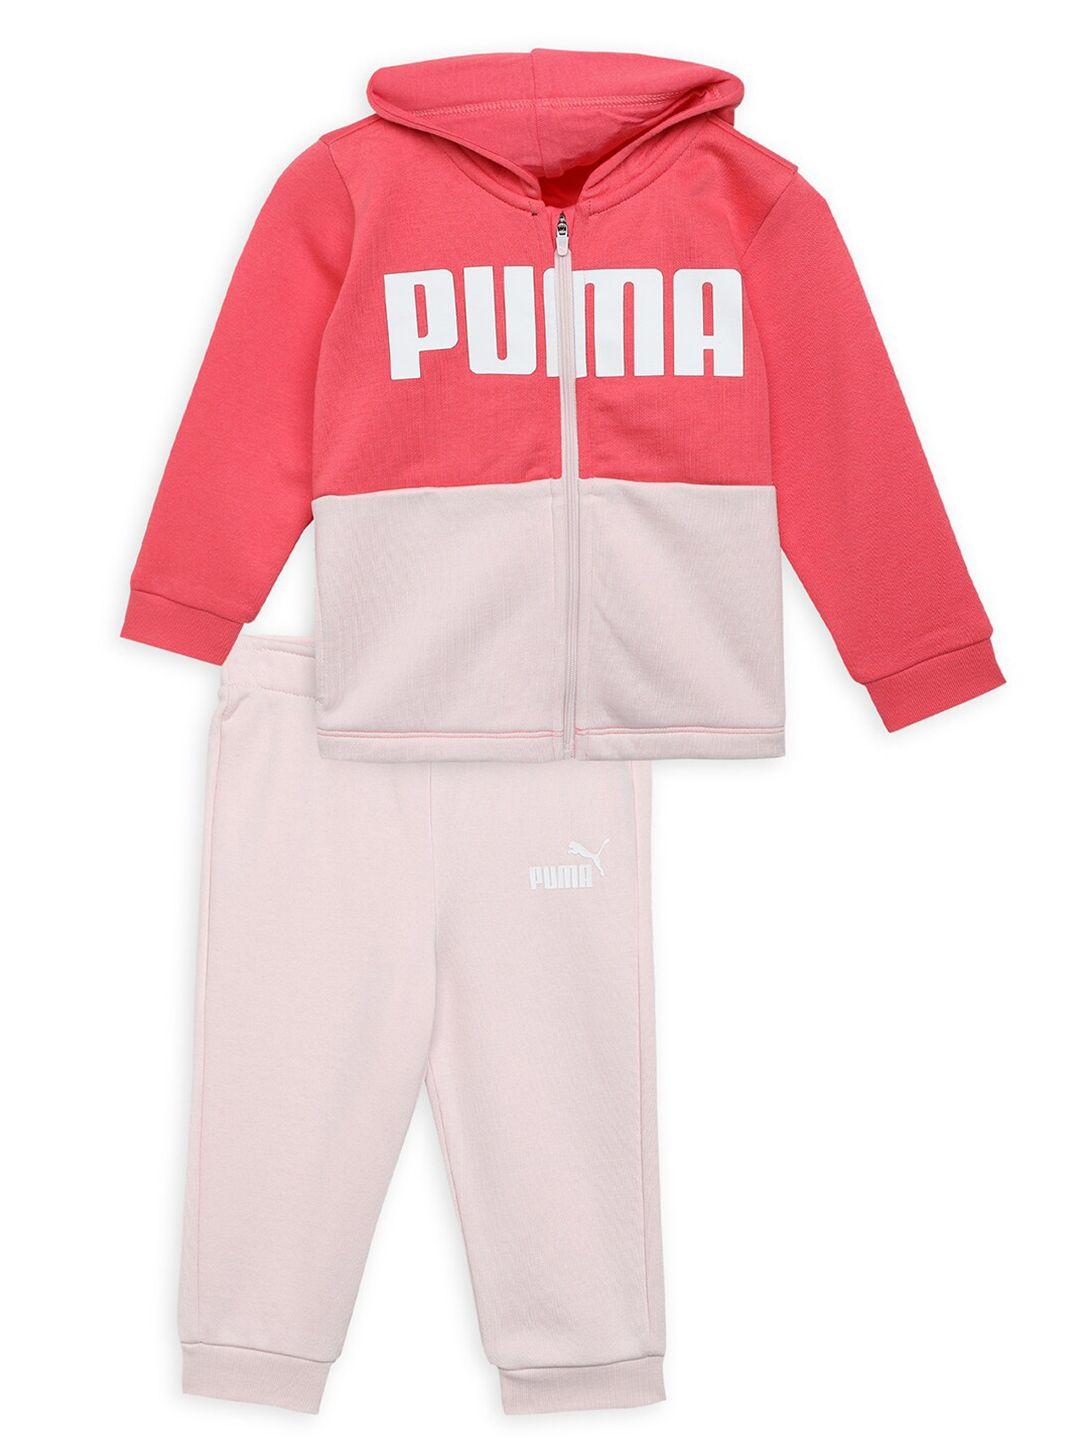 puma kids colourblock clothing set